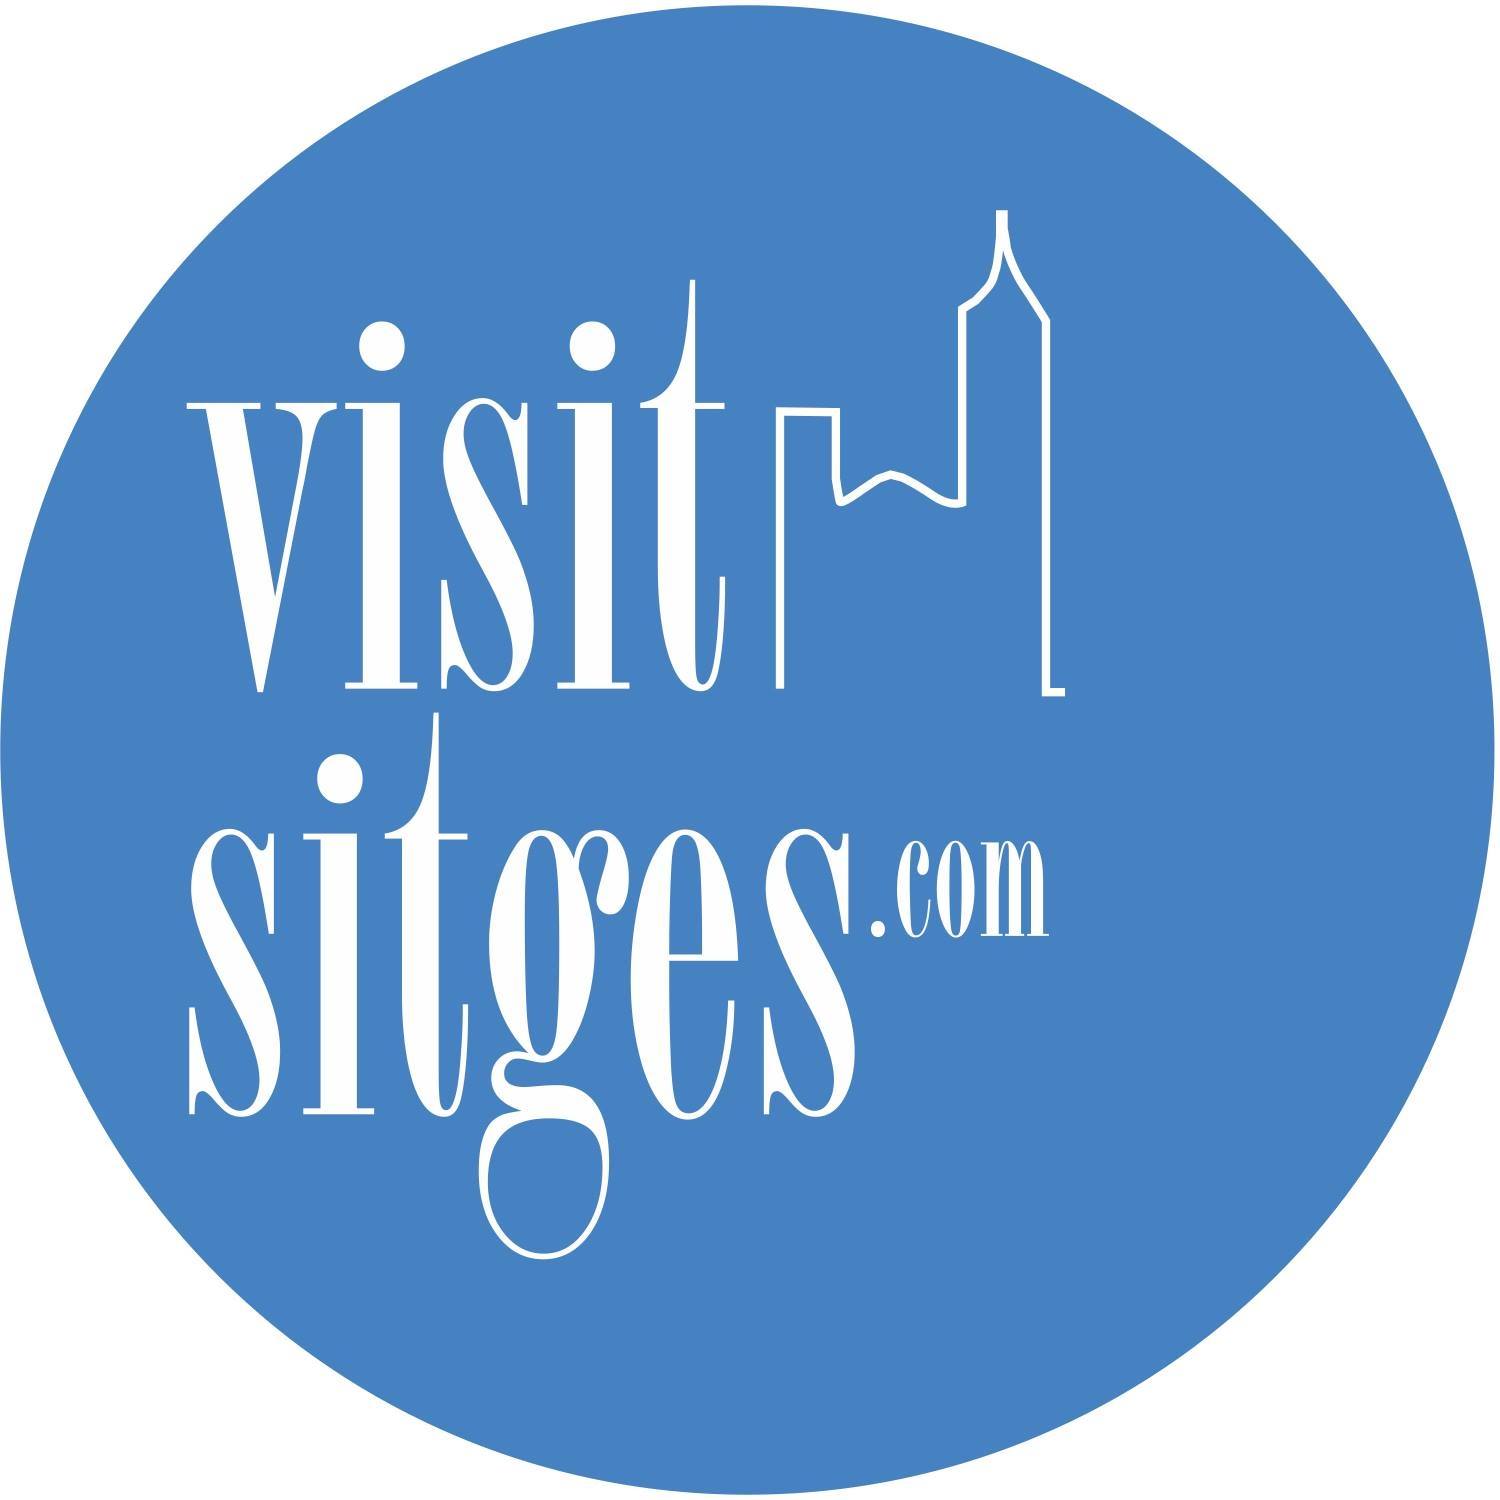 Visita Sitges